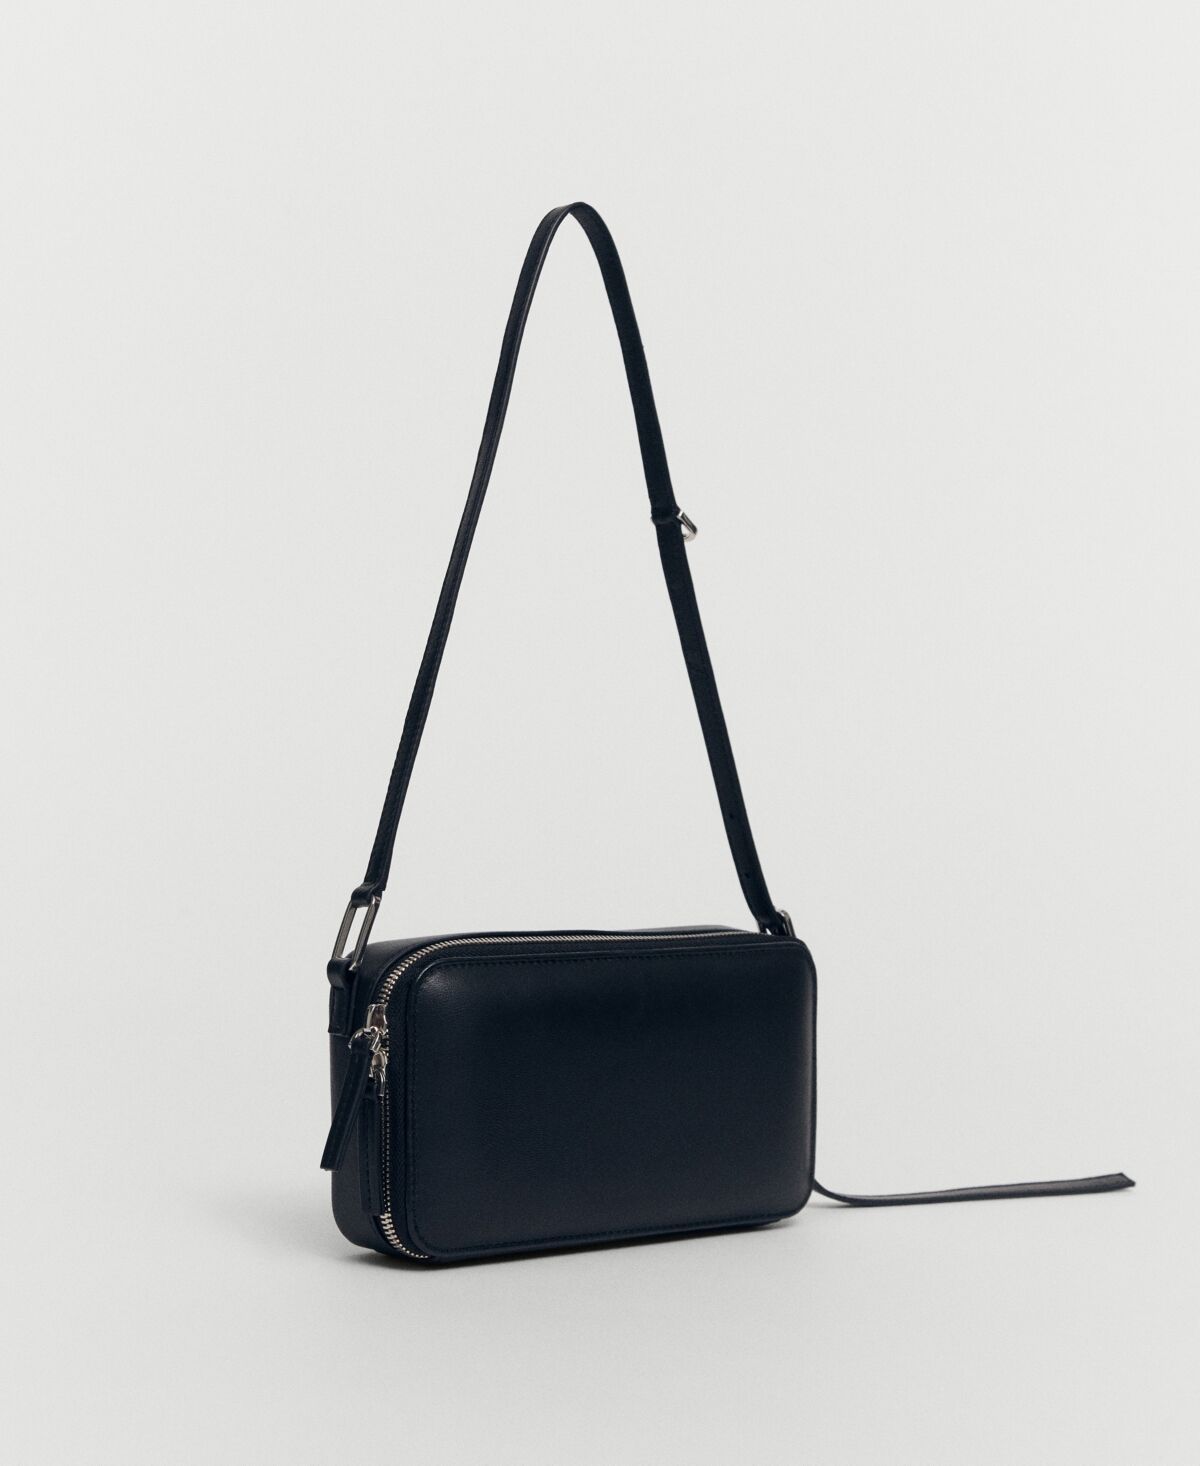 Mango Women's Rectangular Leather Handbag - Black